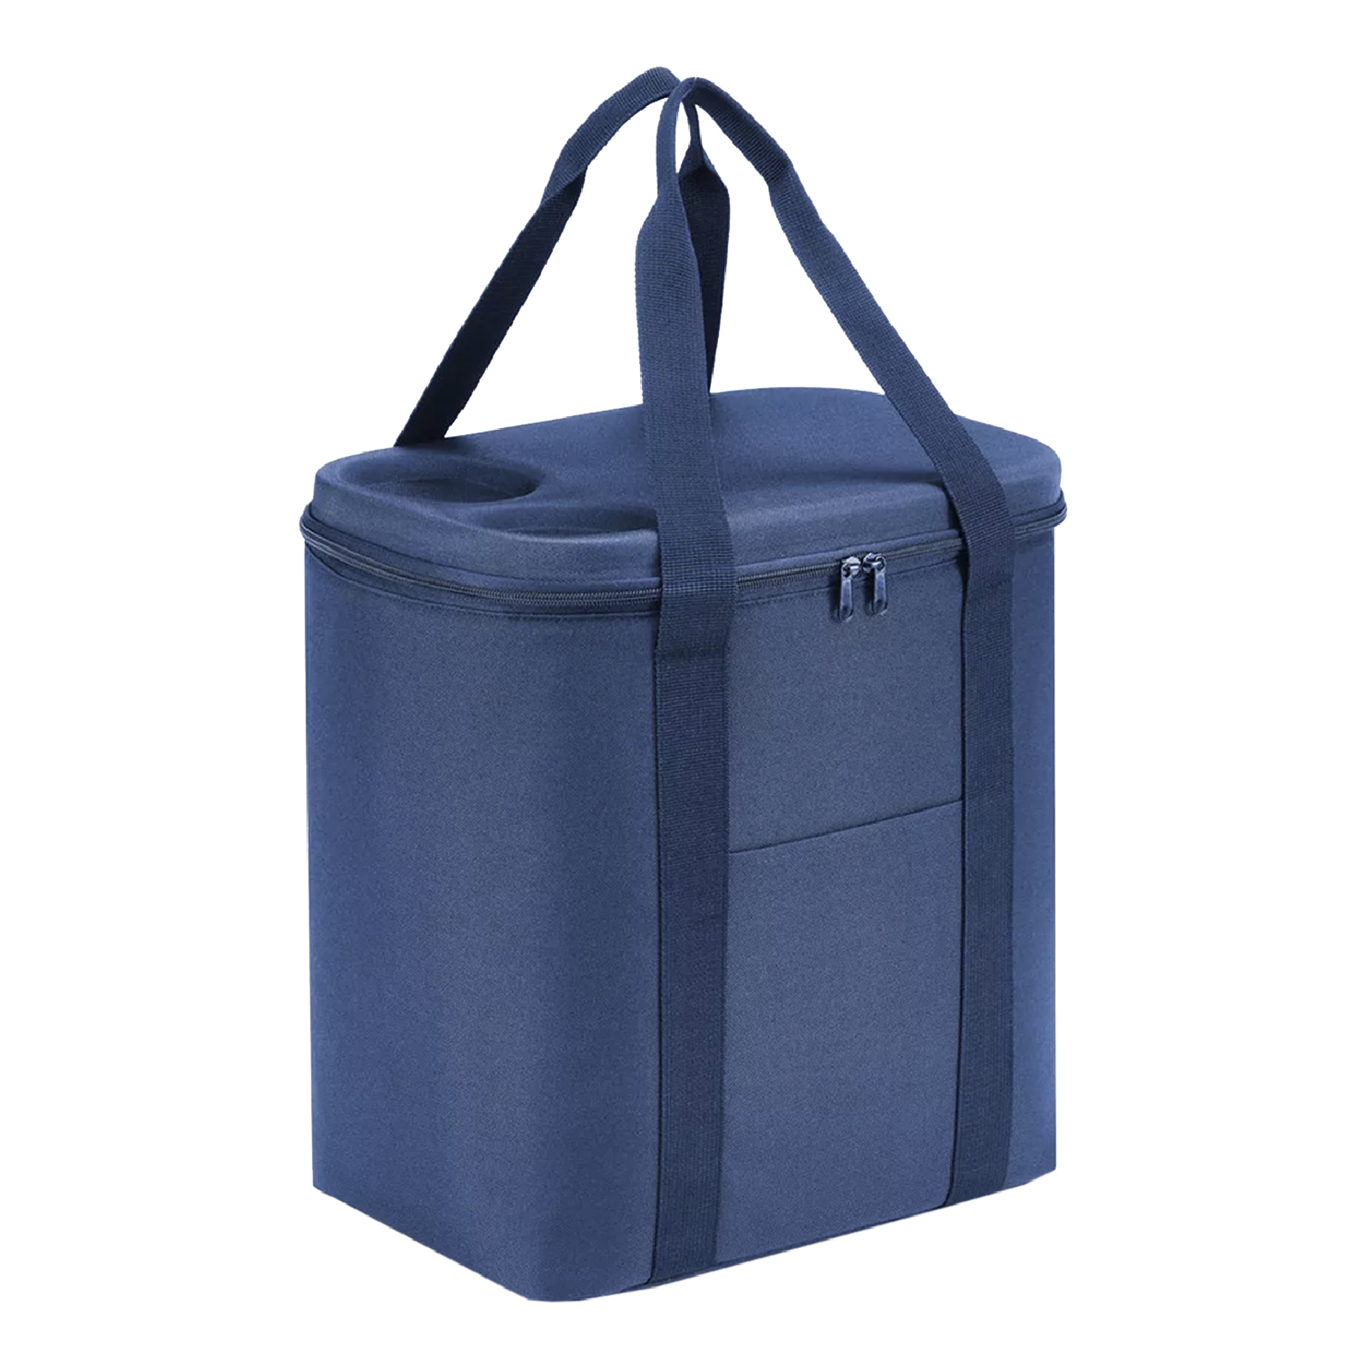 Reisenthel koeltas Shopping Coolerbag XL blauw online kopen